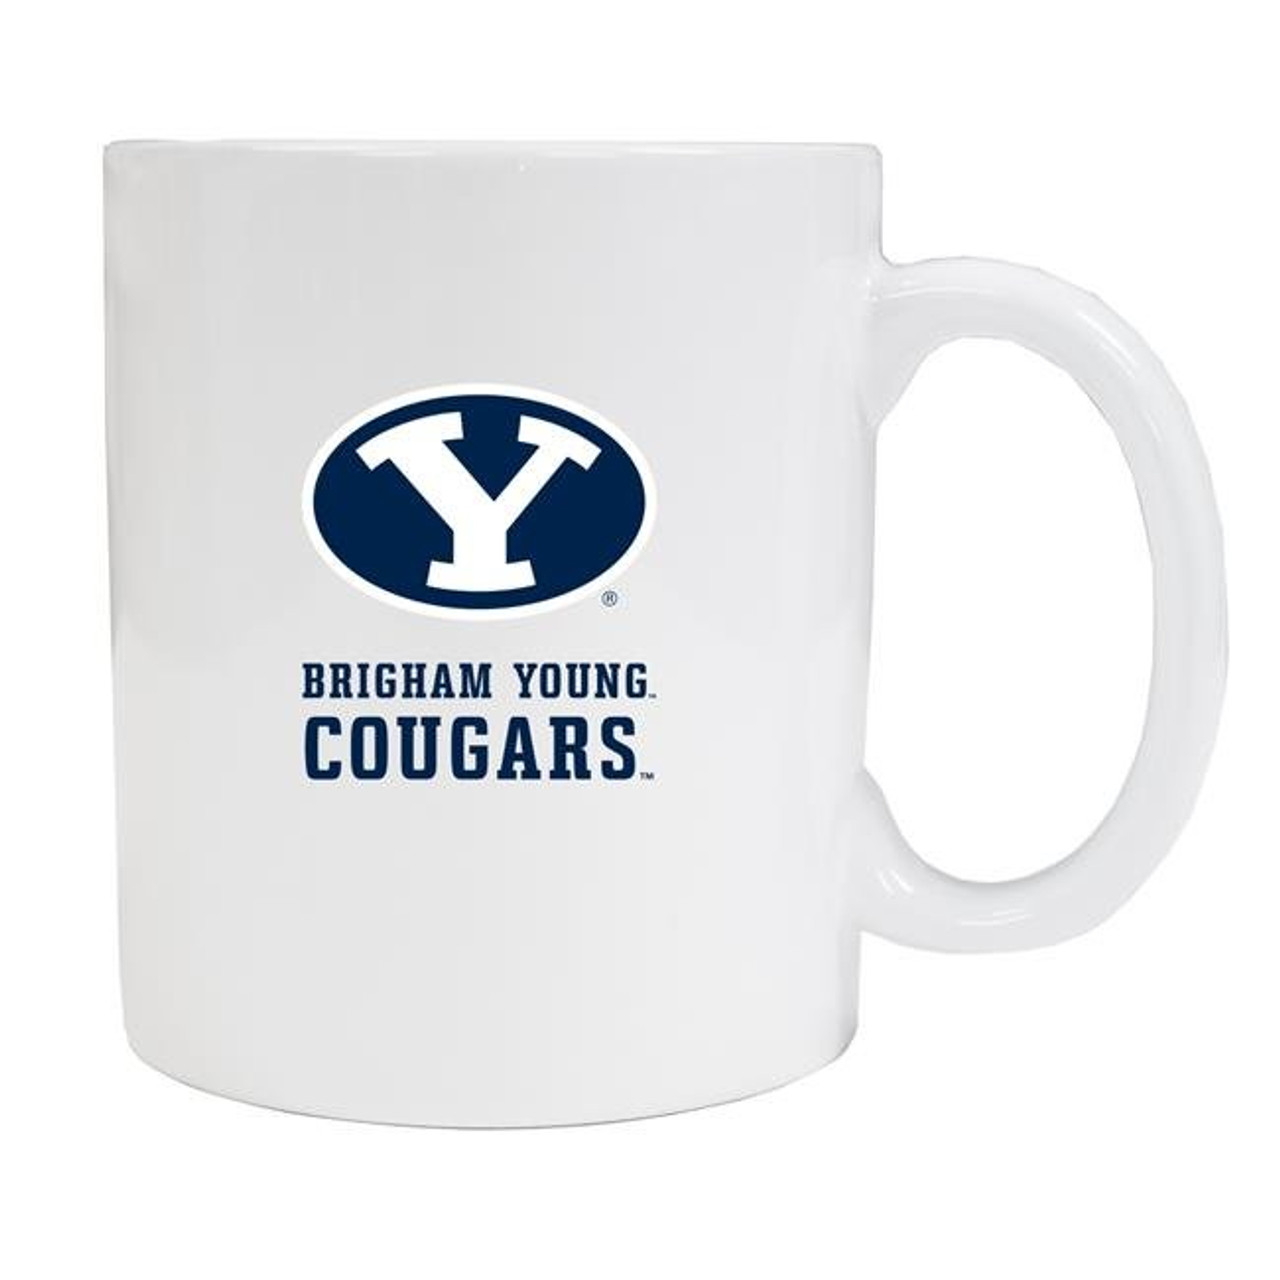 Brigham Young Cougars White Ceramic Mug 2-Pack (White).